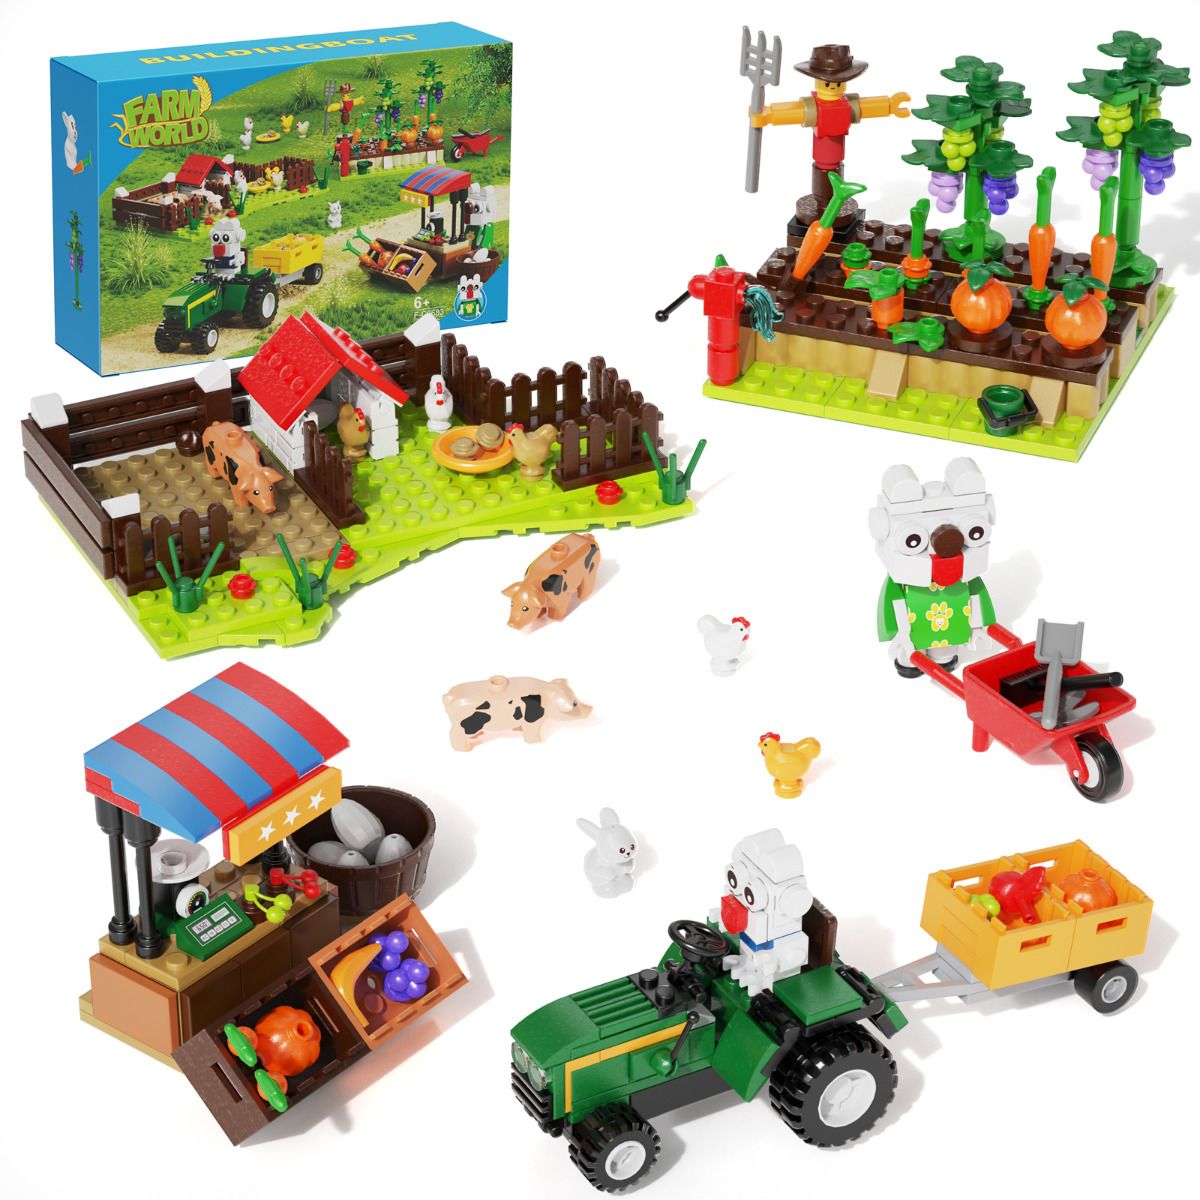 A Small Farm (409 PCS)